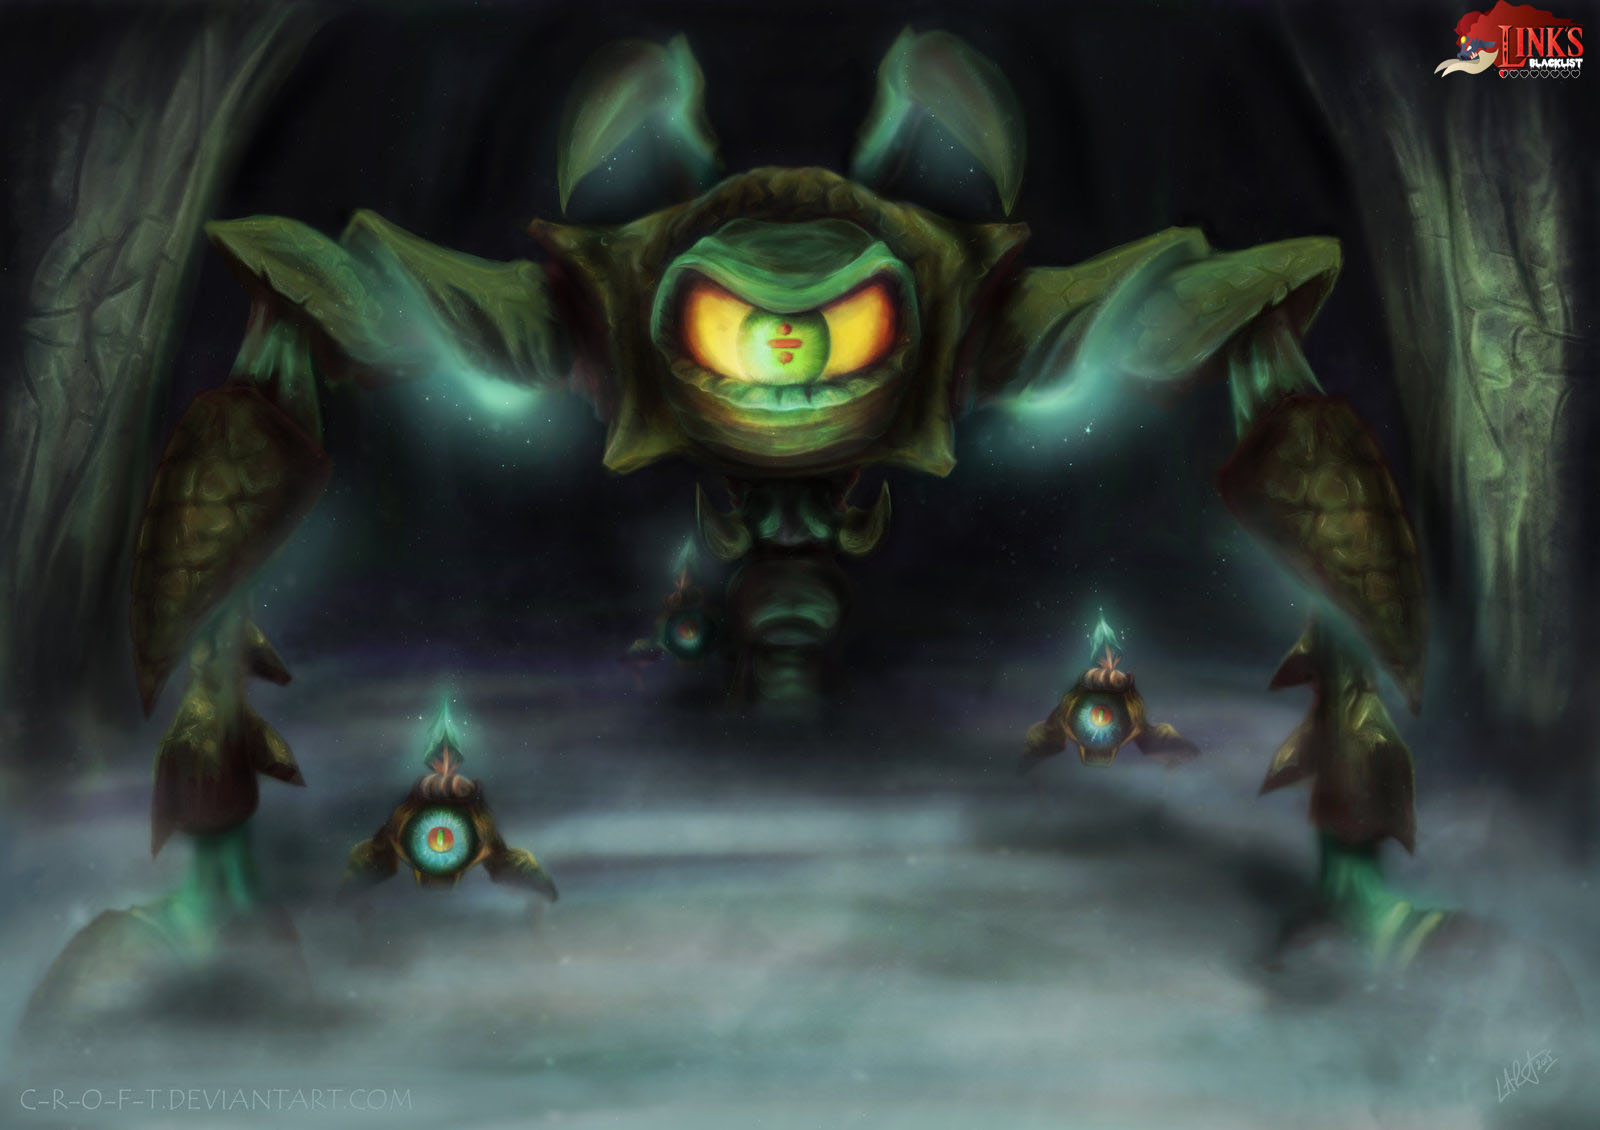 Zelda Ocarina Of Time on N64 : Inside the Deku Tree